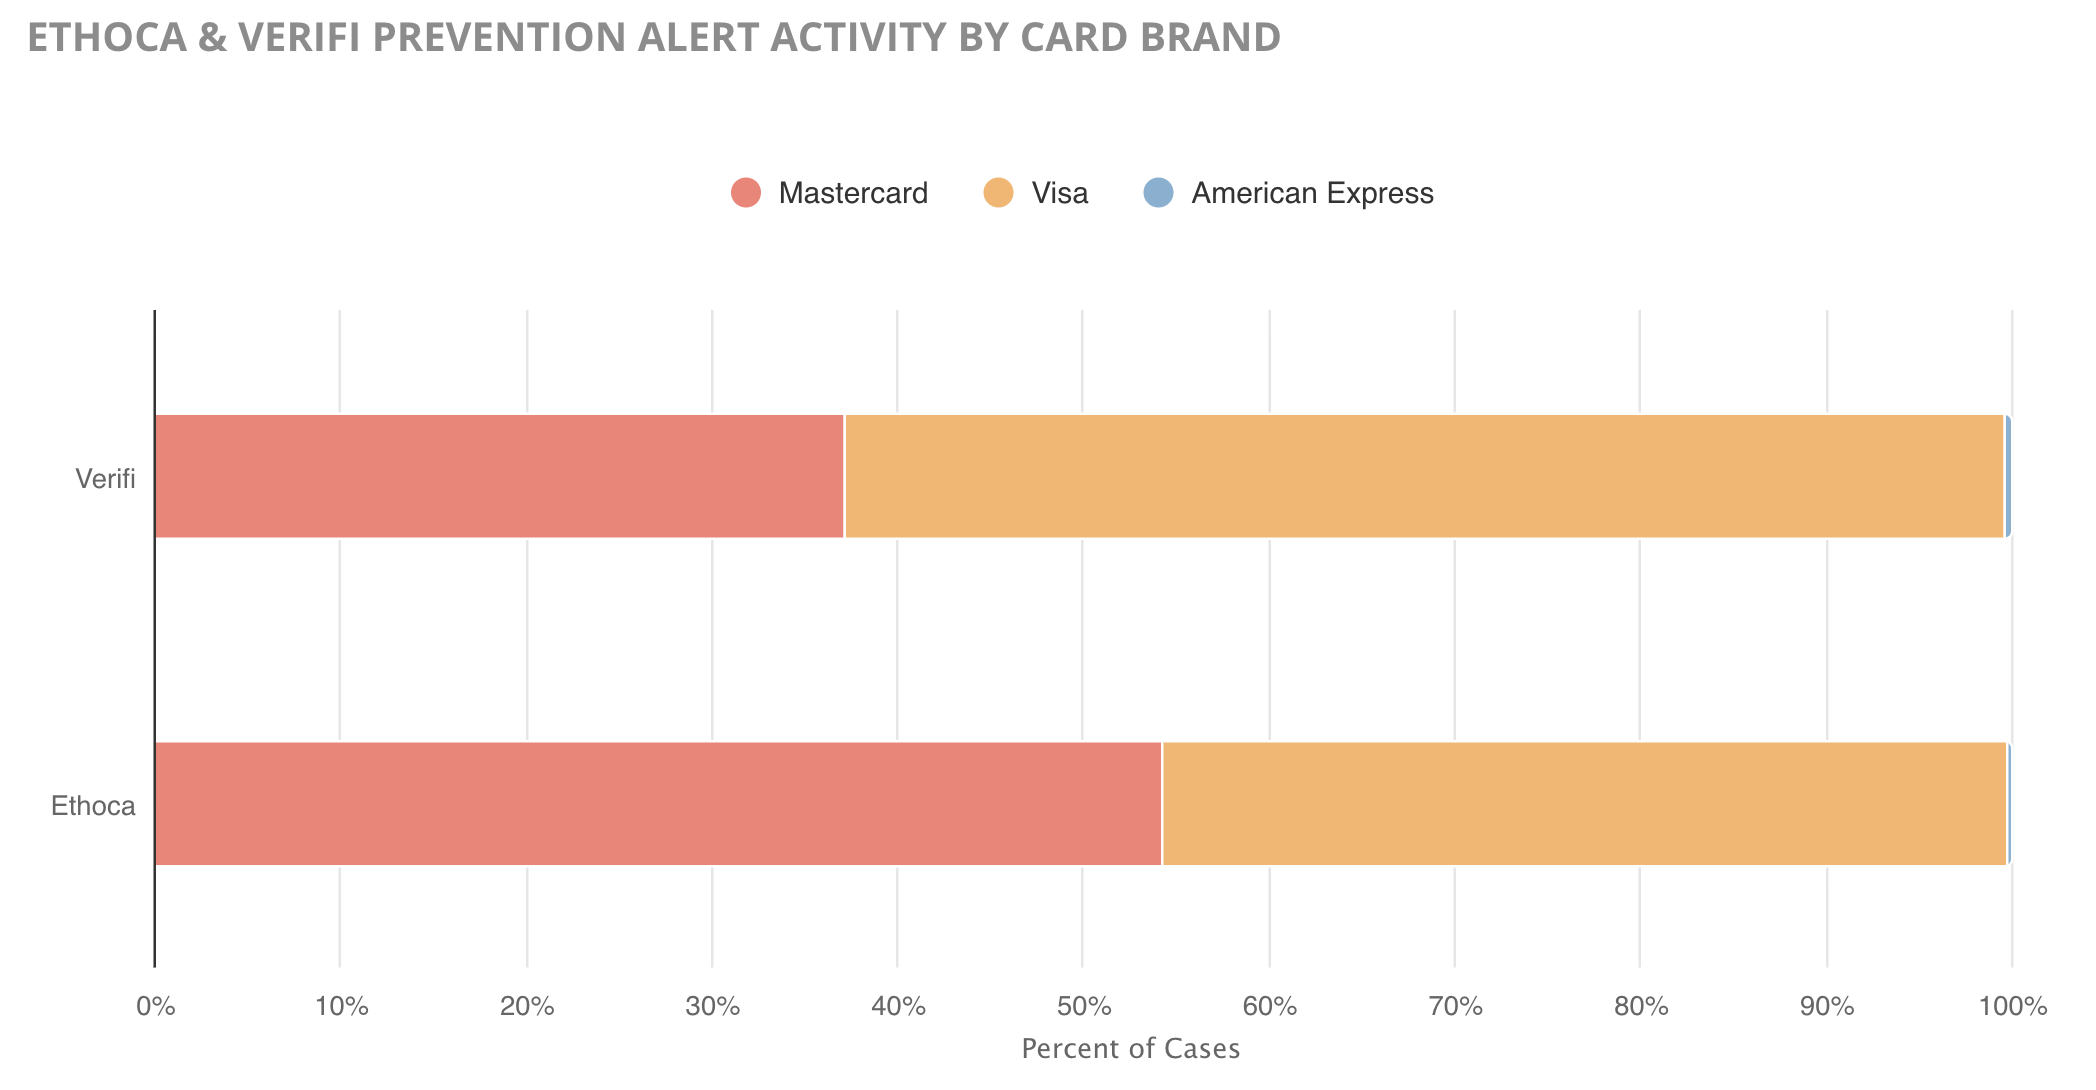 Ethoca & Verifi prevention alert activity by card brand